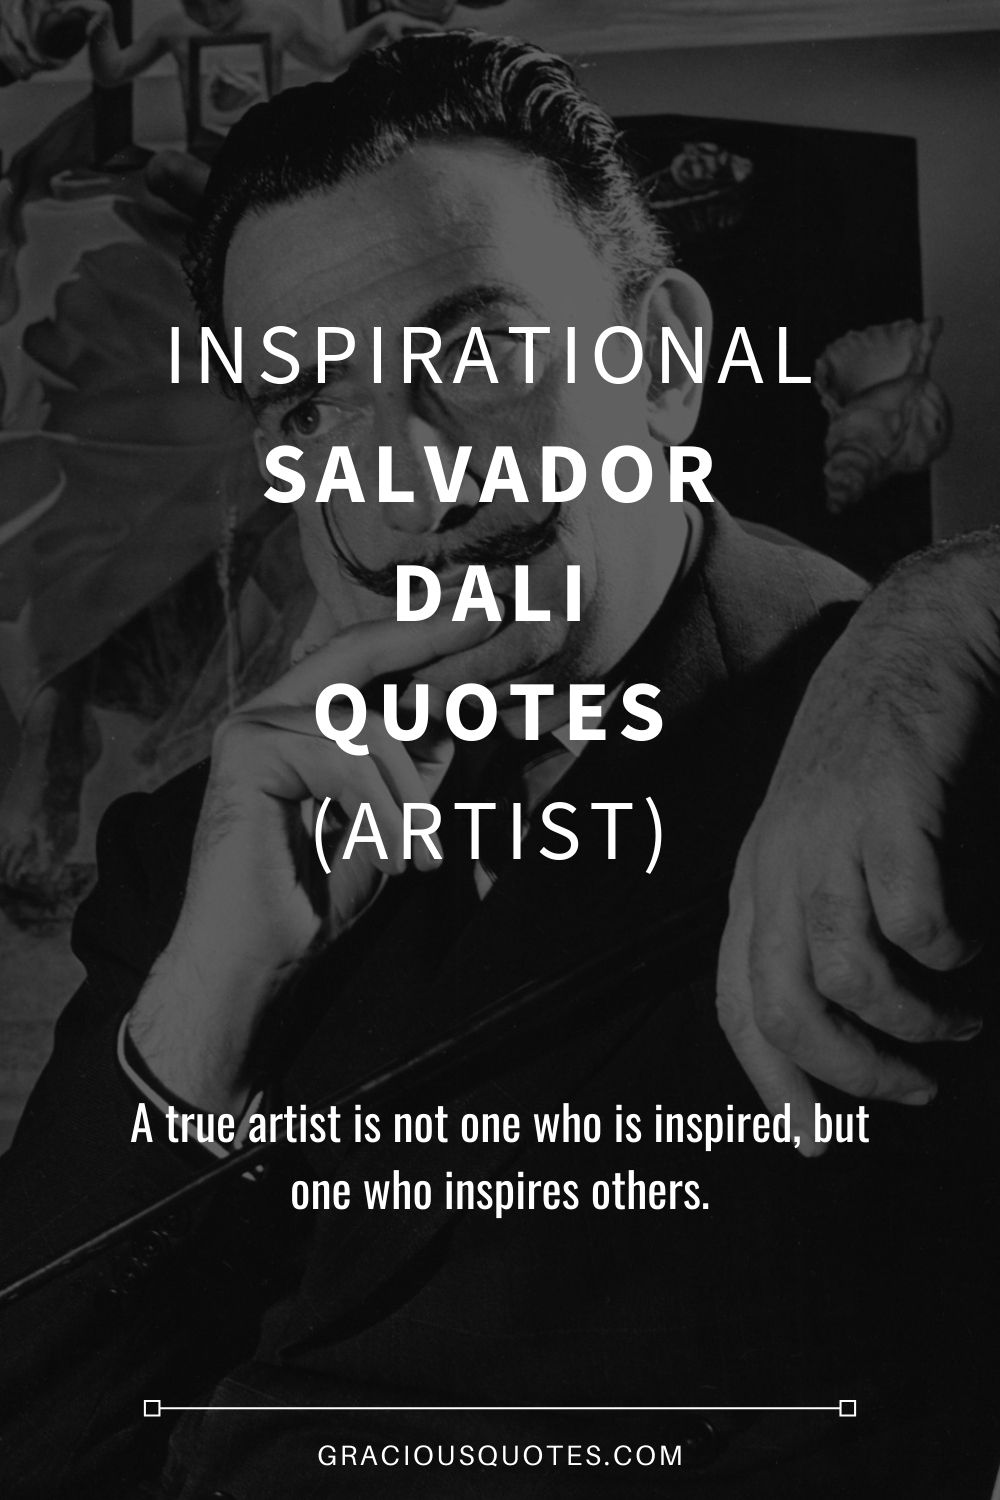 Inspirational Salvador Dali Quotes (ARTIST) - Gracious Quotes